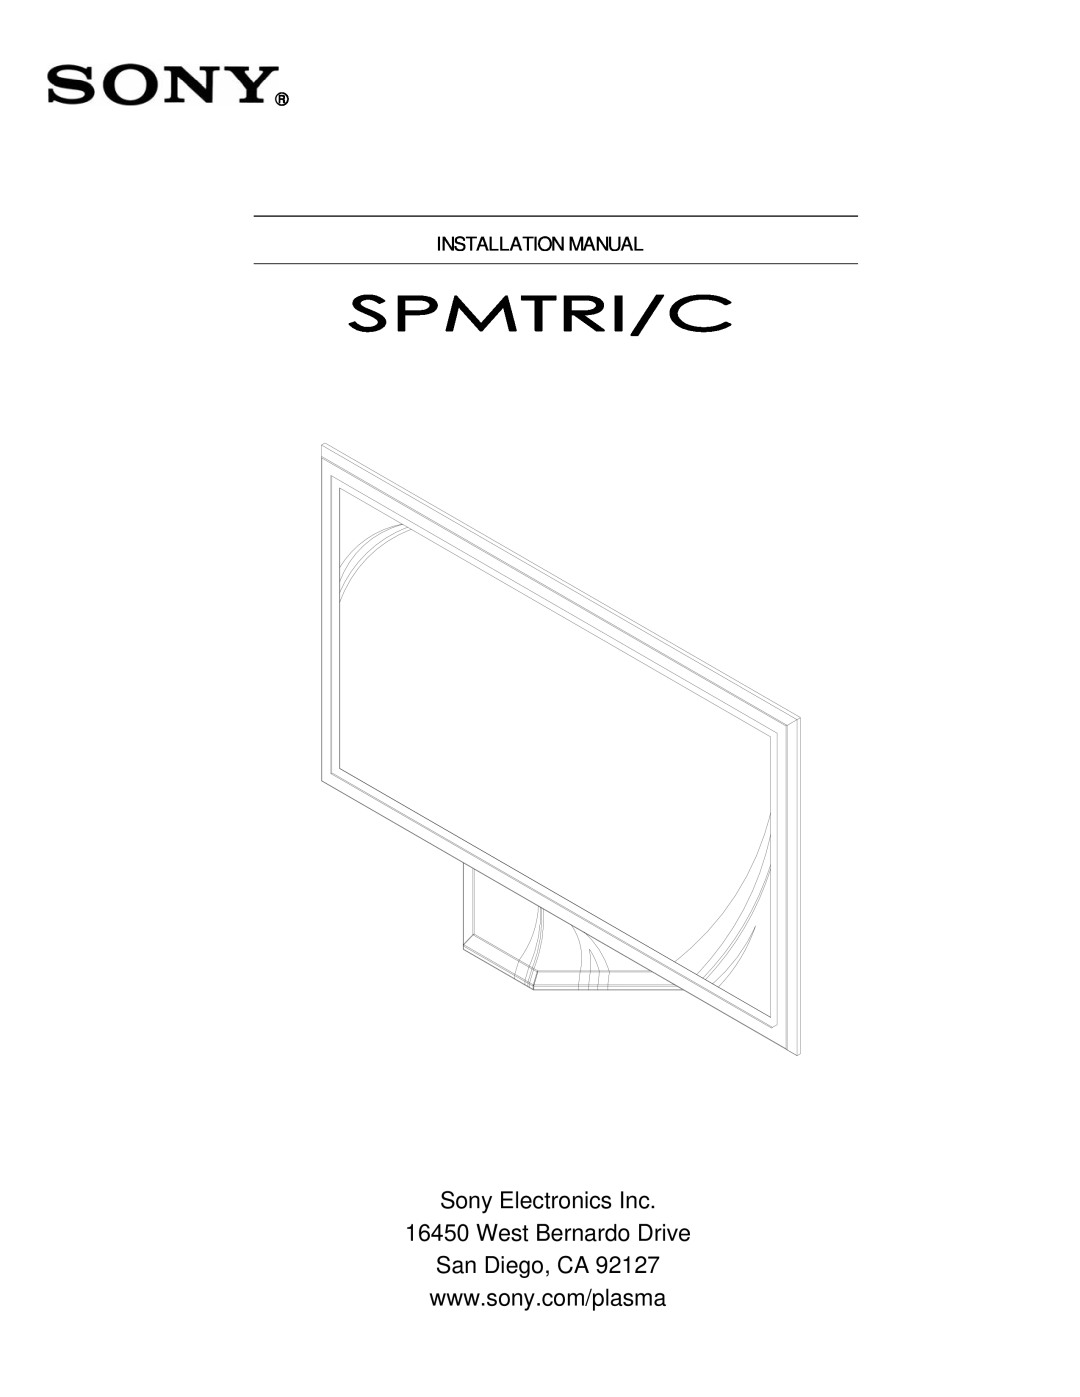 Sony SPM-TRI/C installation manual Sony Electronics Inc 16450 West Bernardo Drive, Installation Manual 